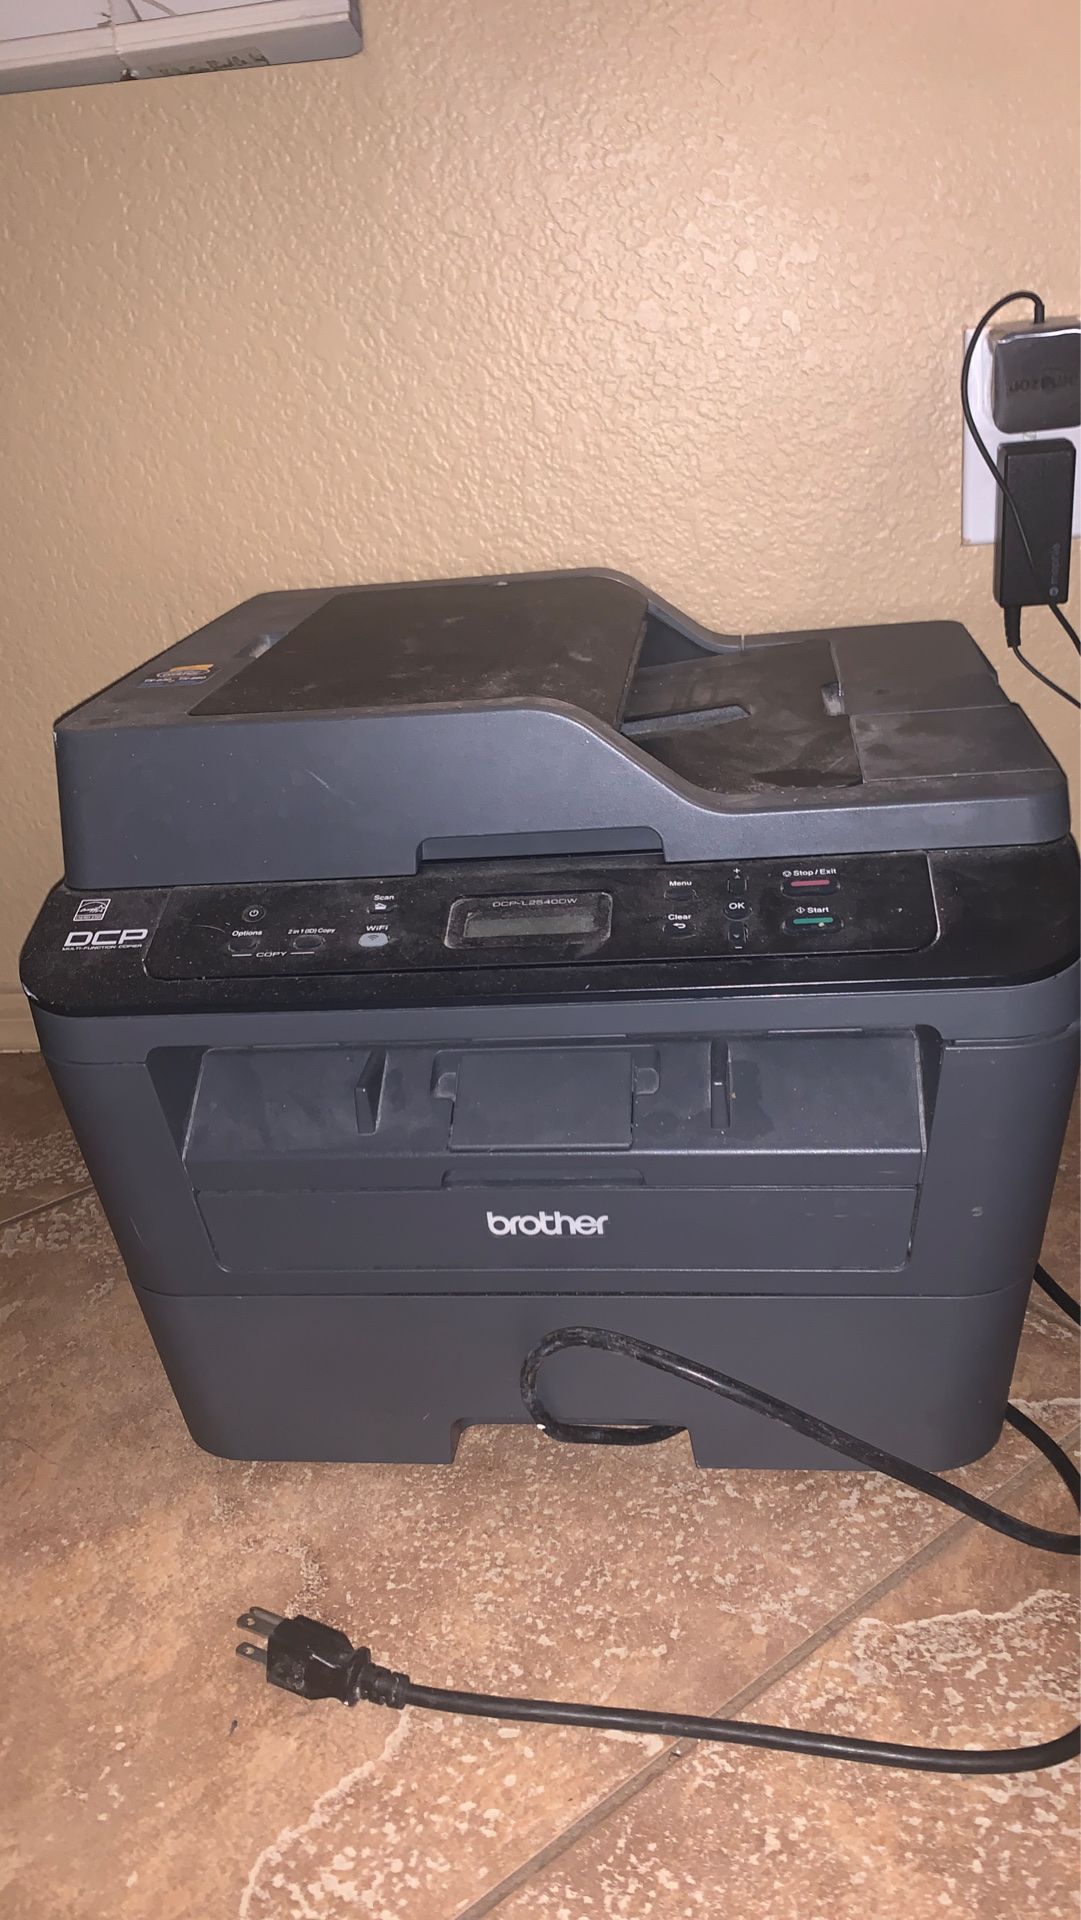 BROTHER printer copier fax machine